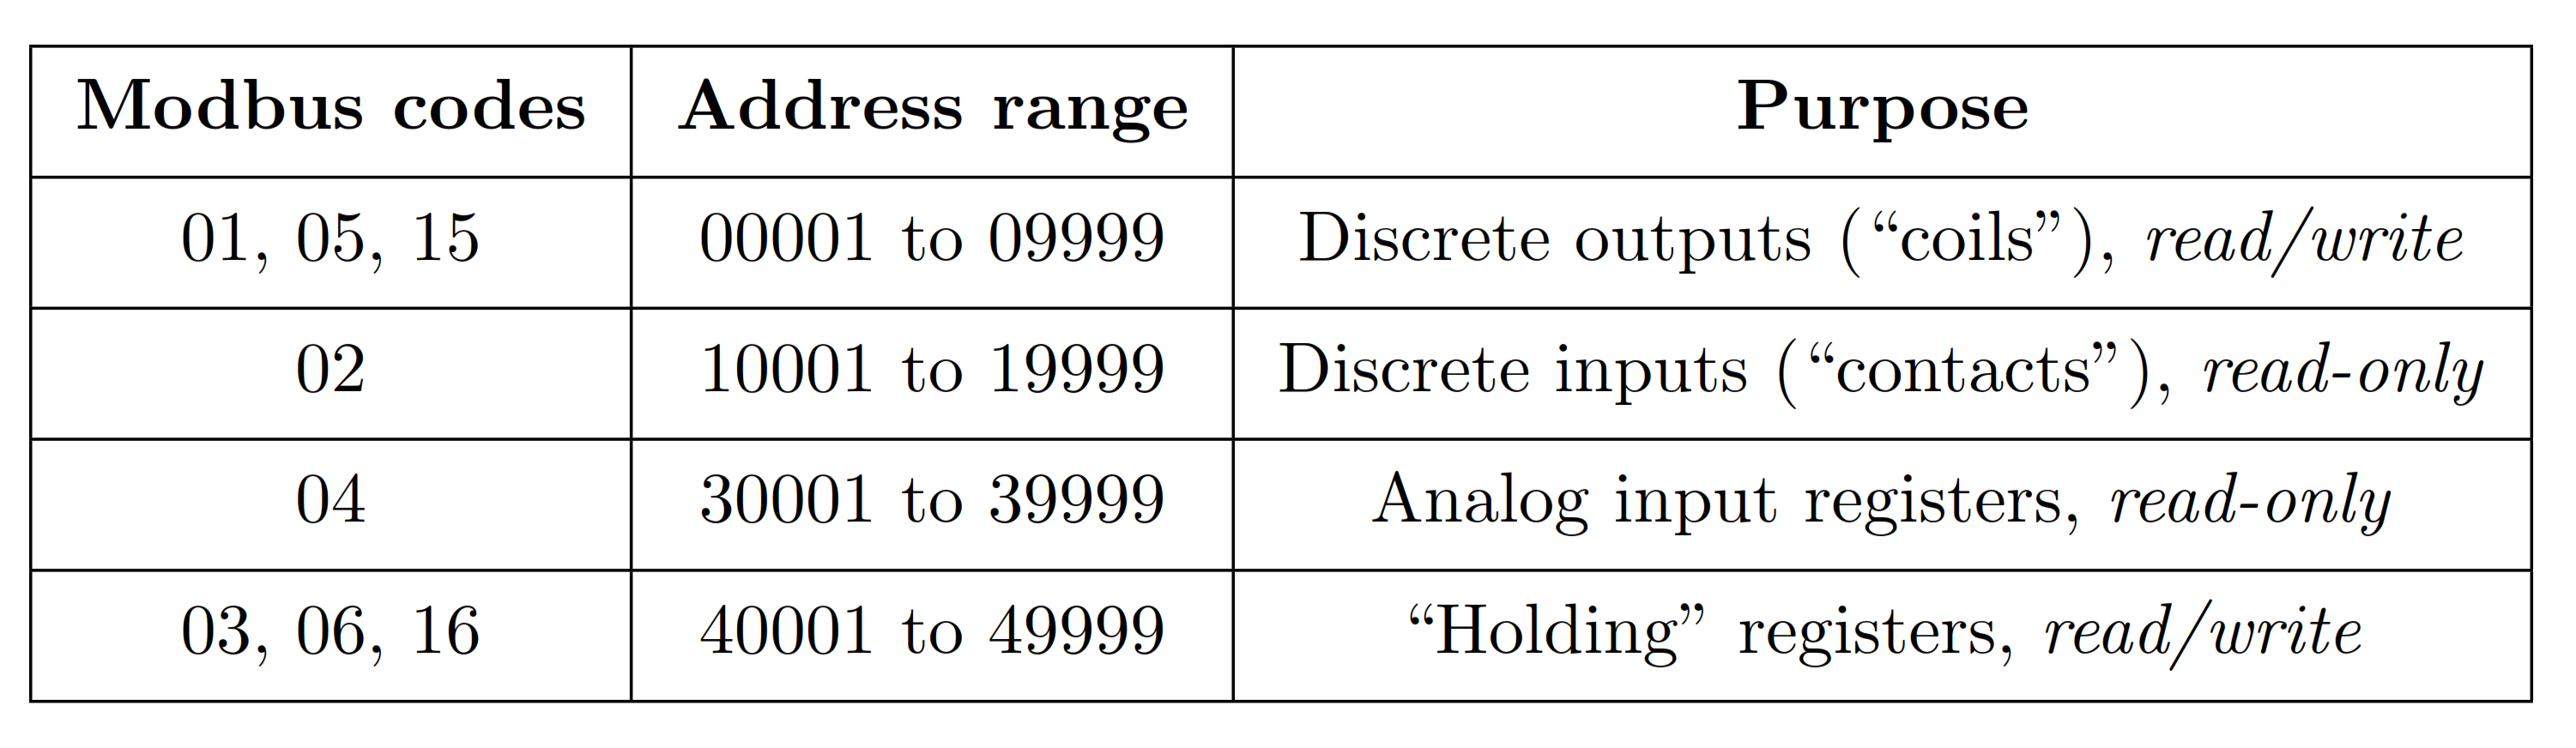 Modbus Address Range